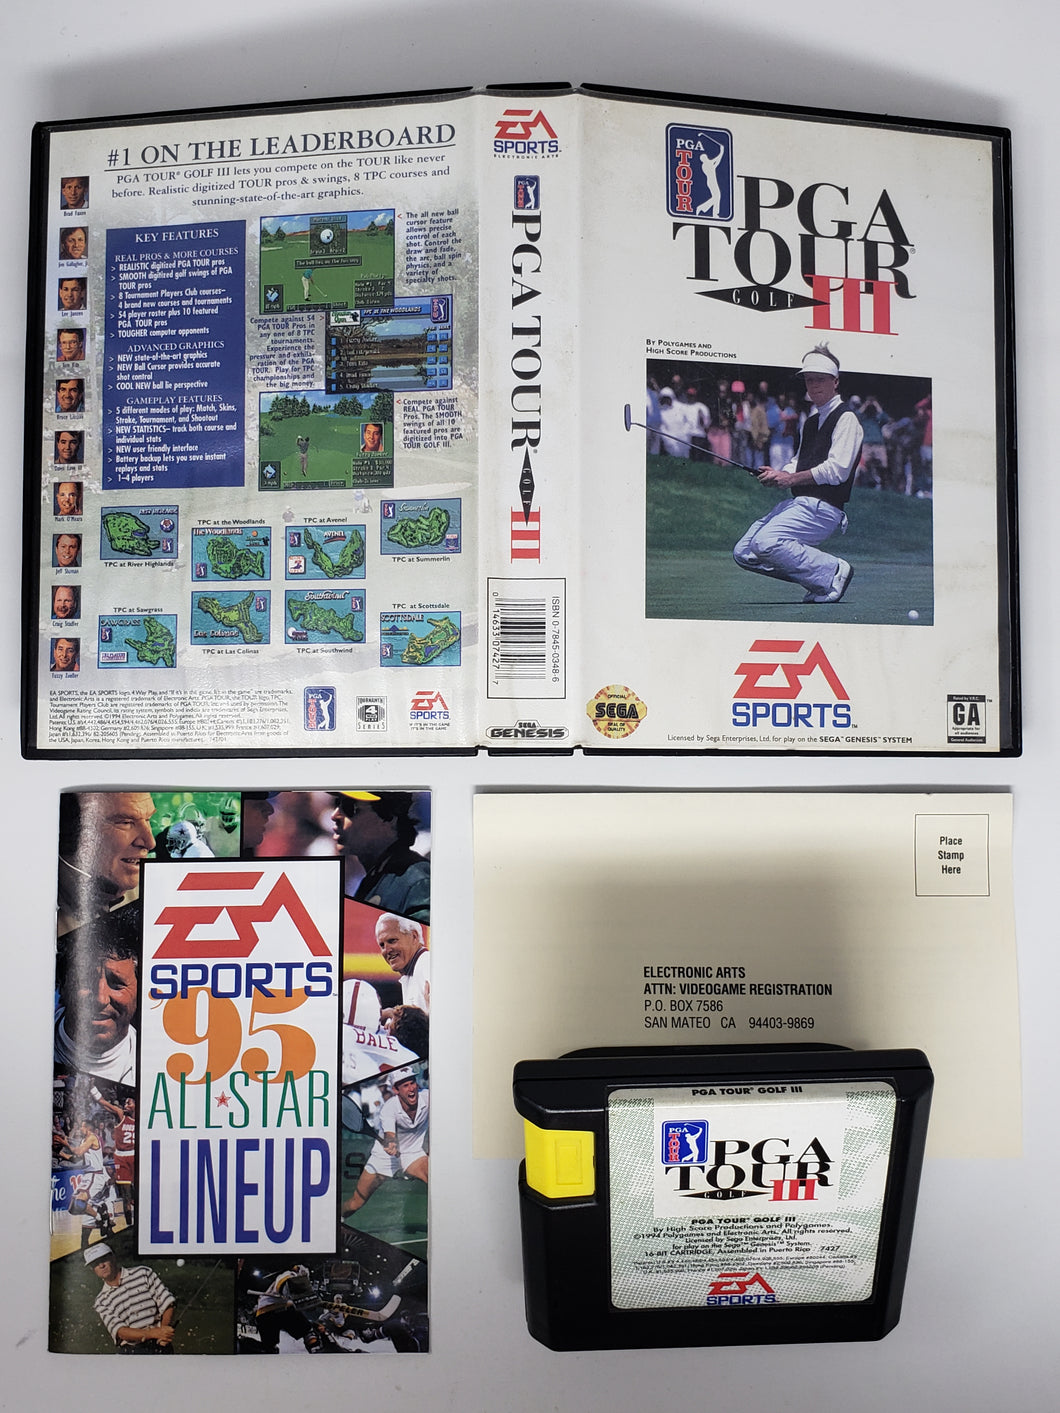 PGA Tour Golf 3 - Sega Genesis